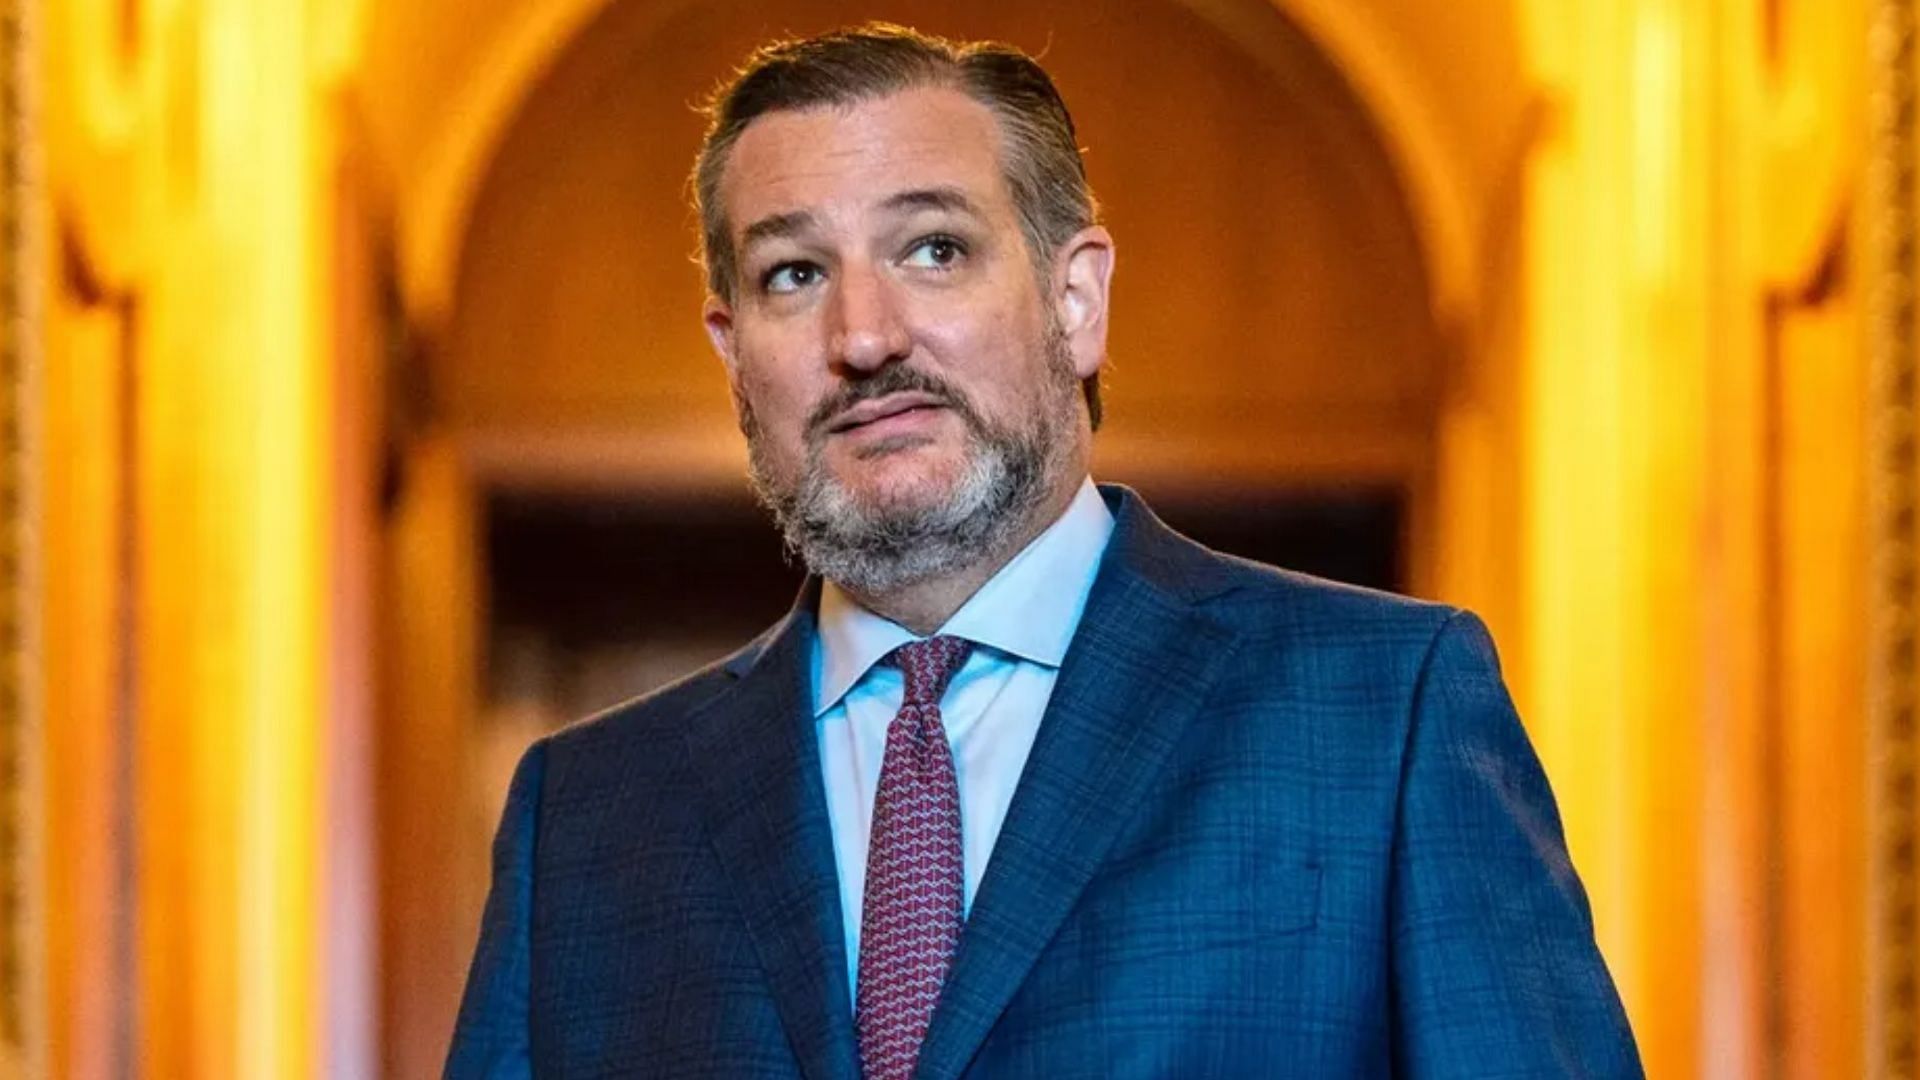 Ted Cruz. (Photo via Getty Images)